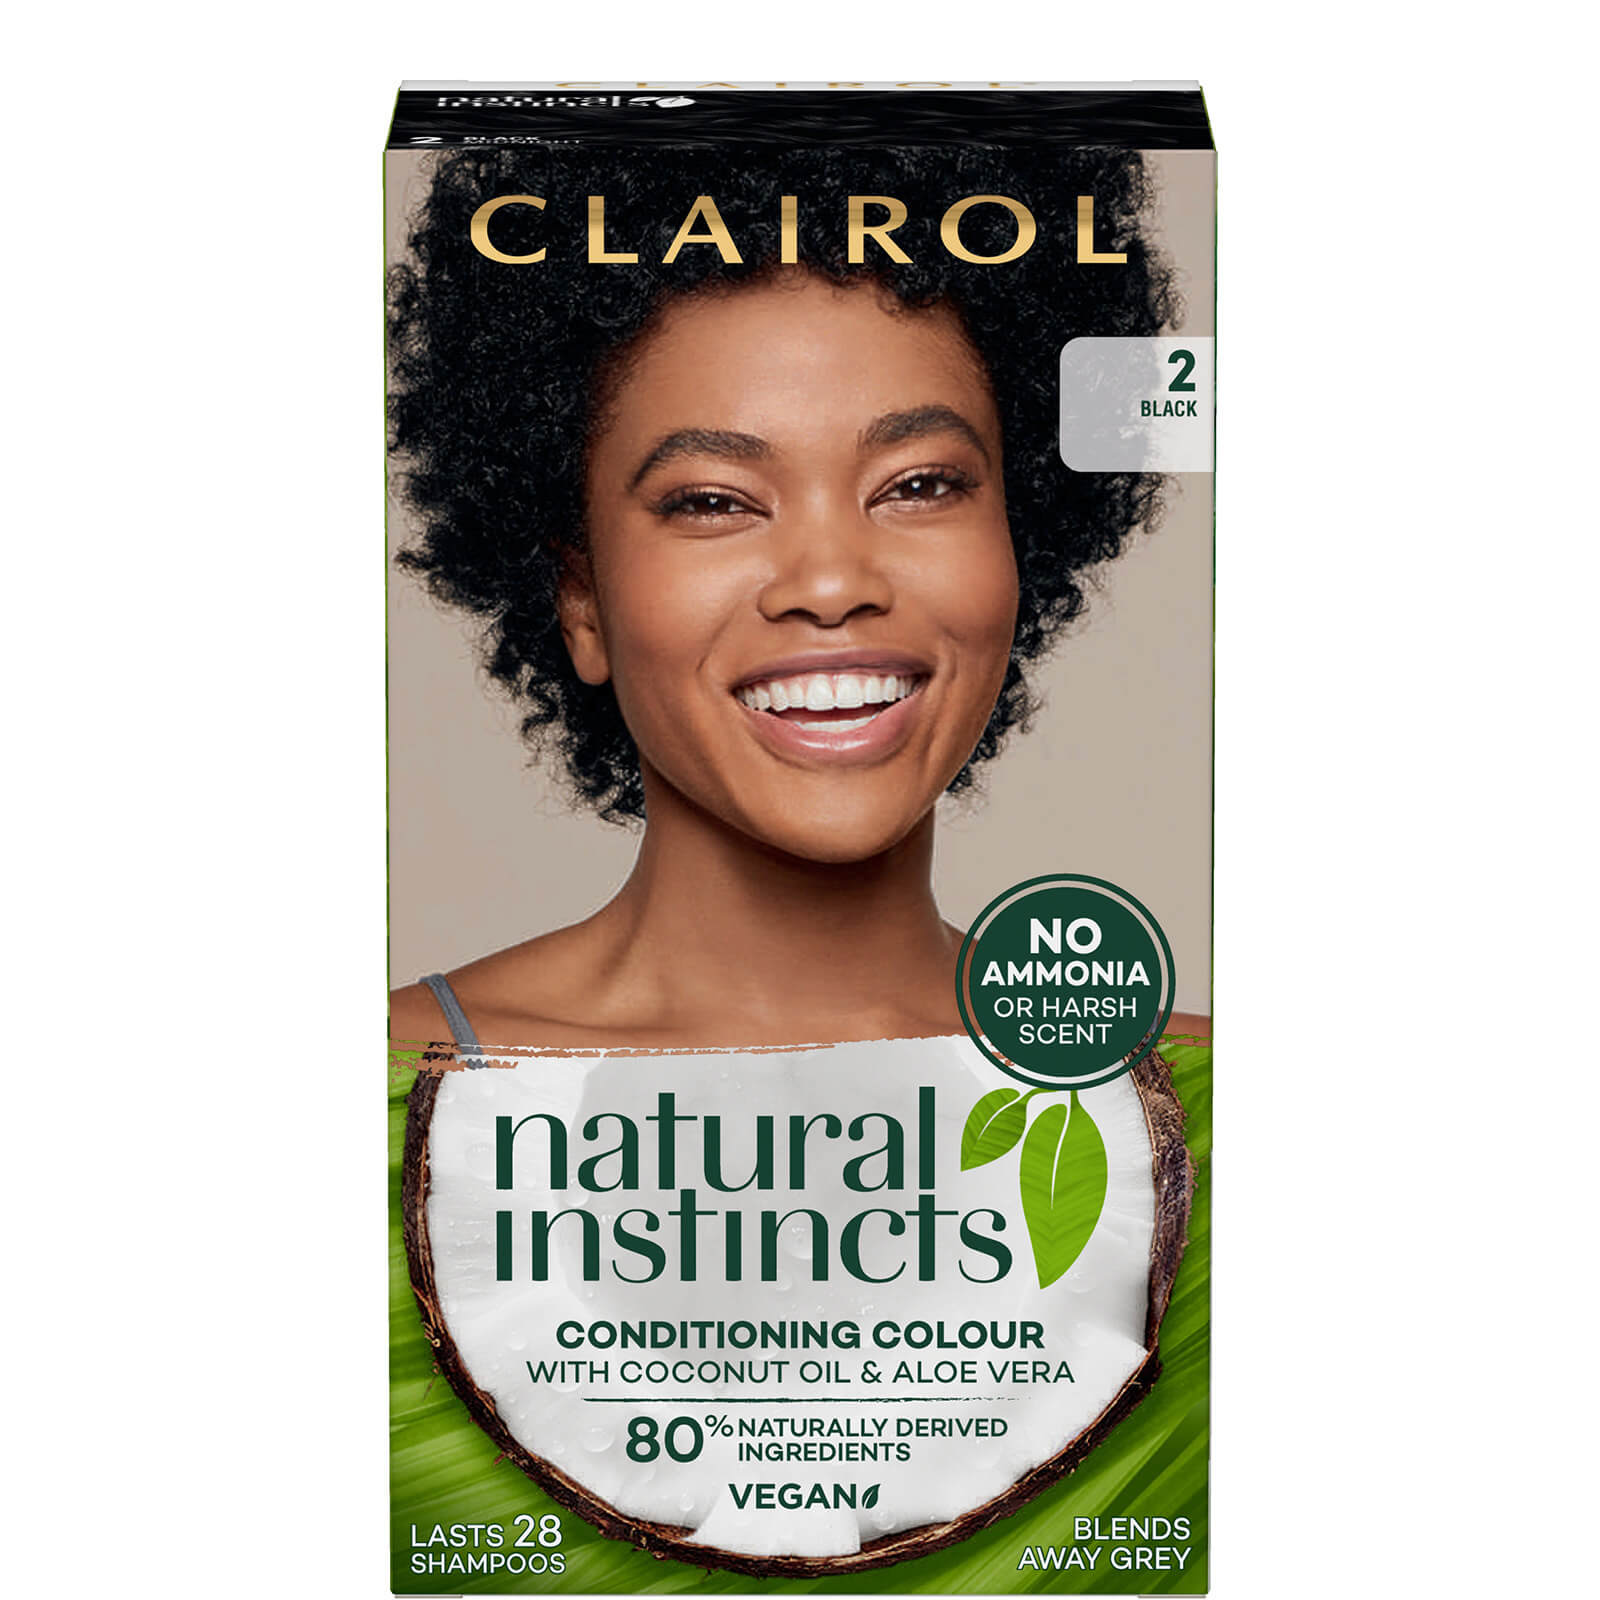 Clairol Natural Instincts Semi-Permanent No Ammonia Vegan Hair Dye 177ml (Various Shades) - 2 Black